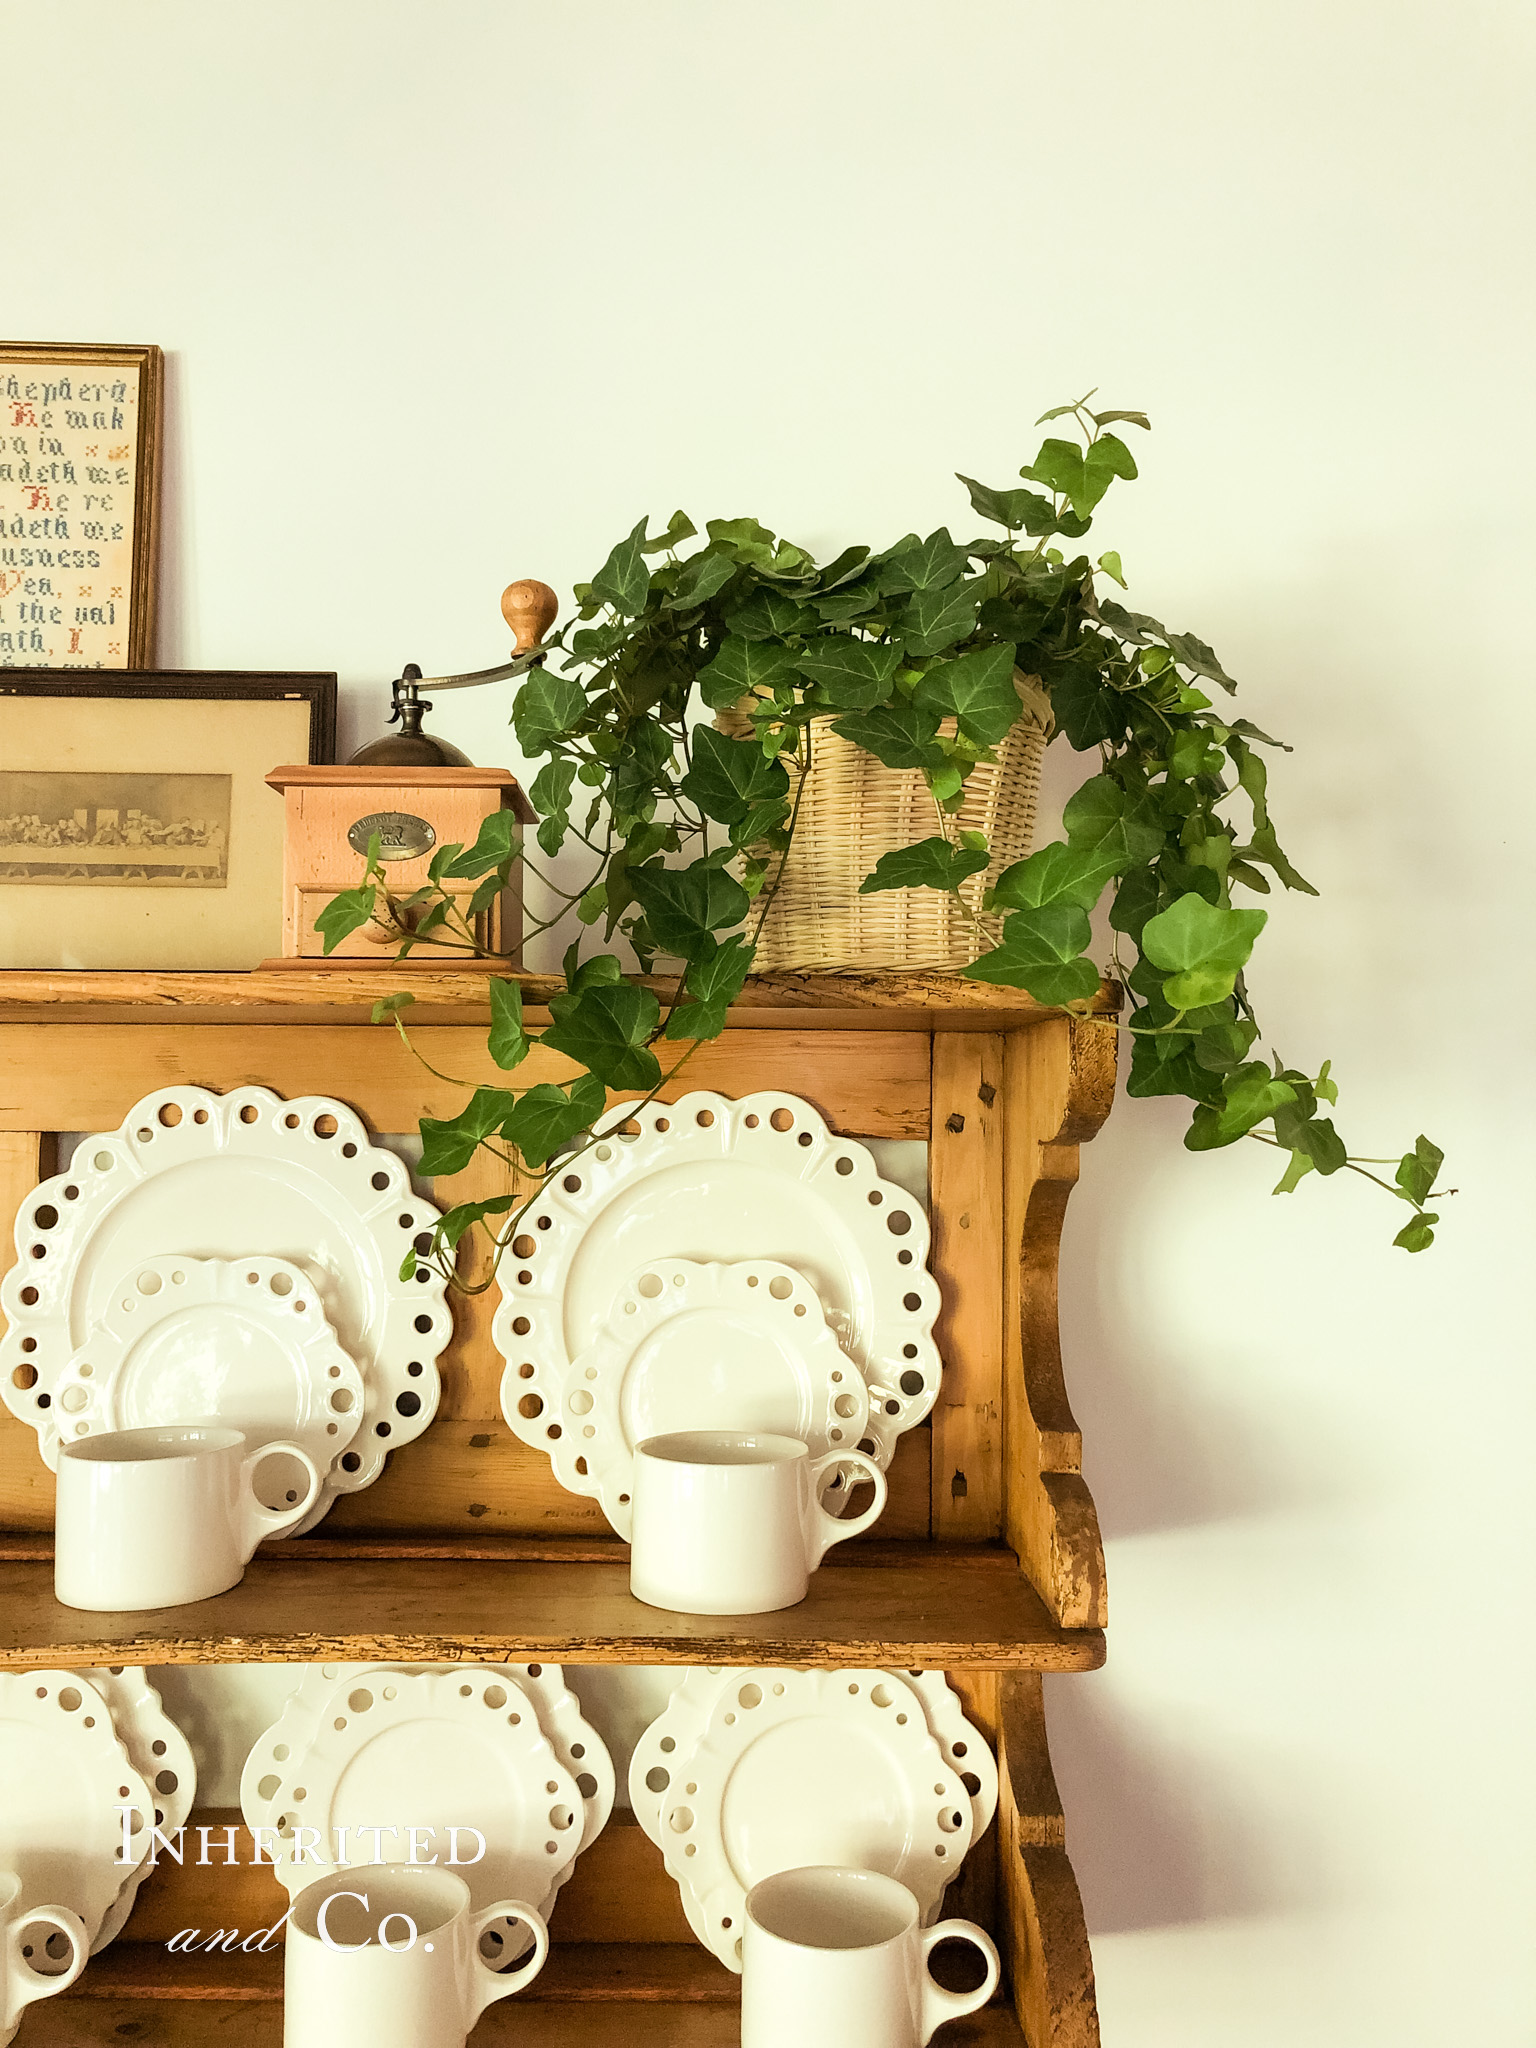 English ivy plant atop an antique hanging shelf